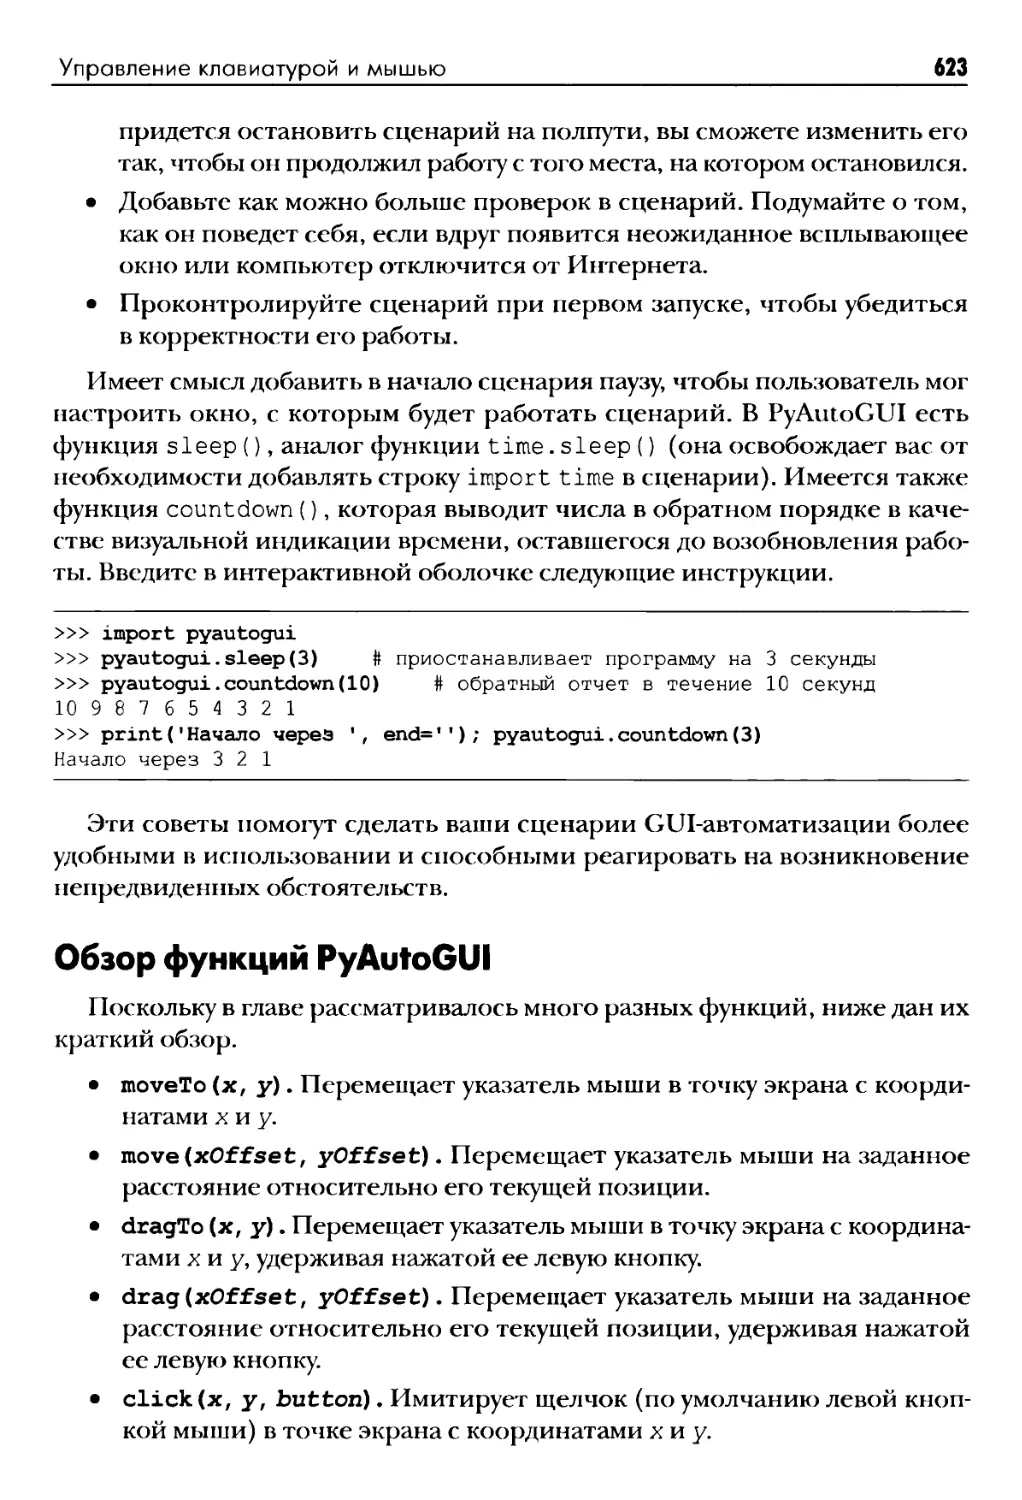 Обзор функций PyAutoGUI